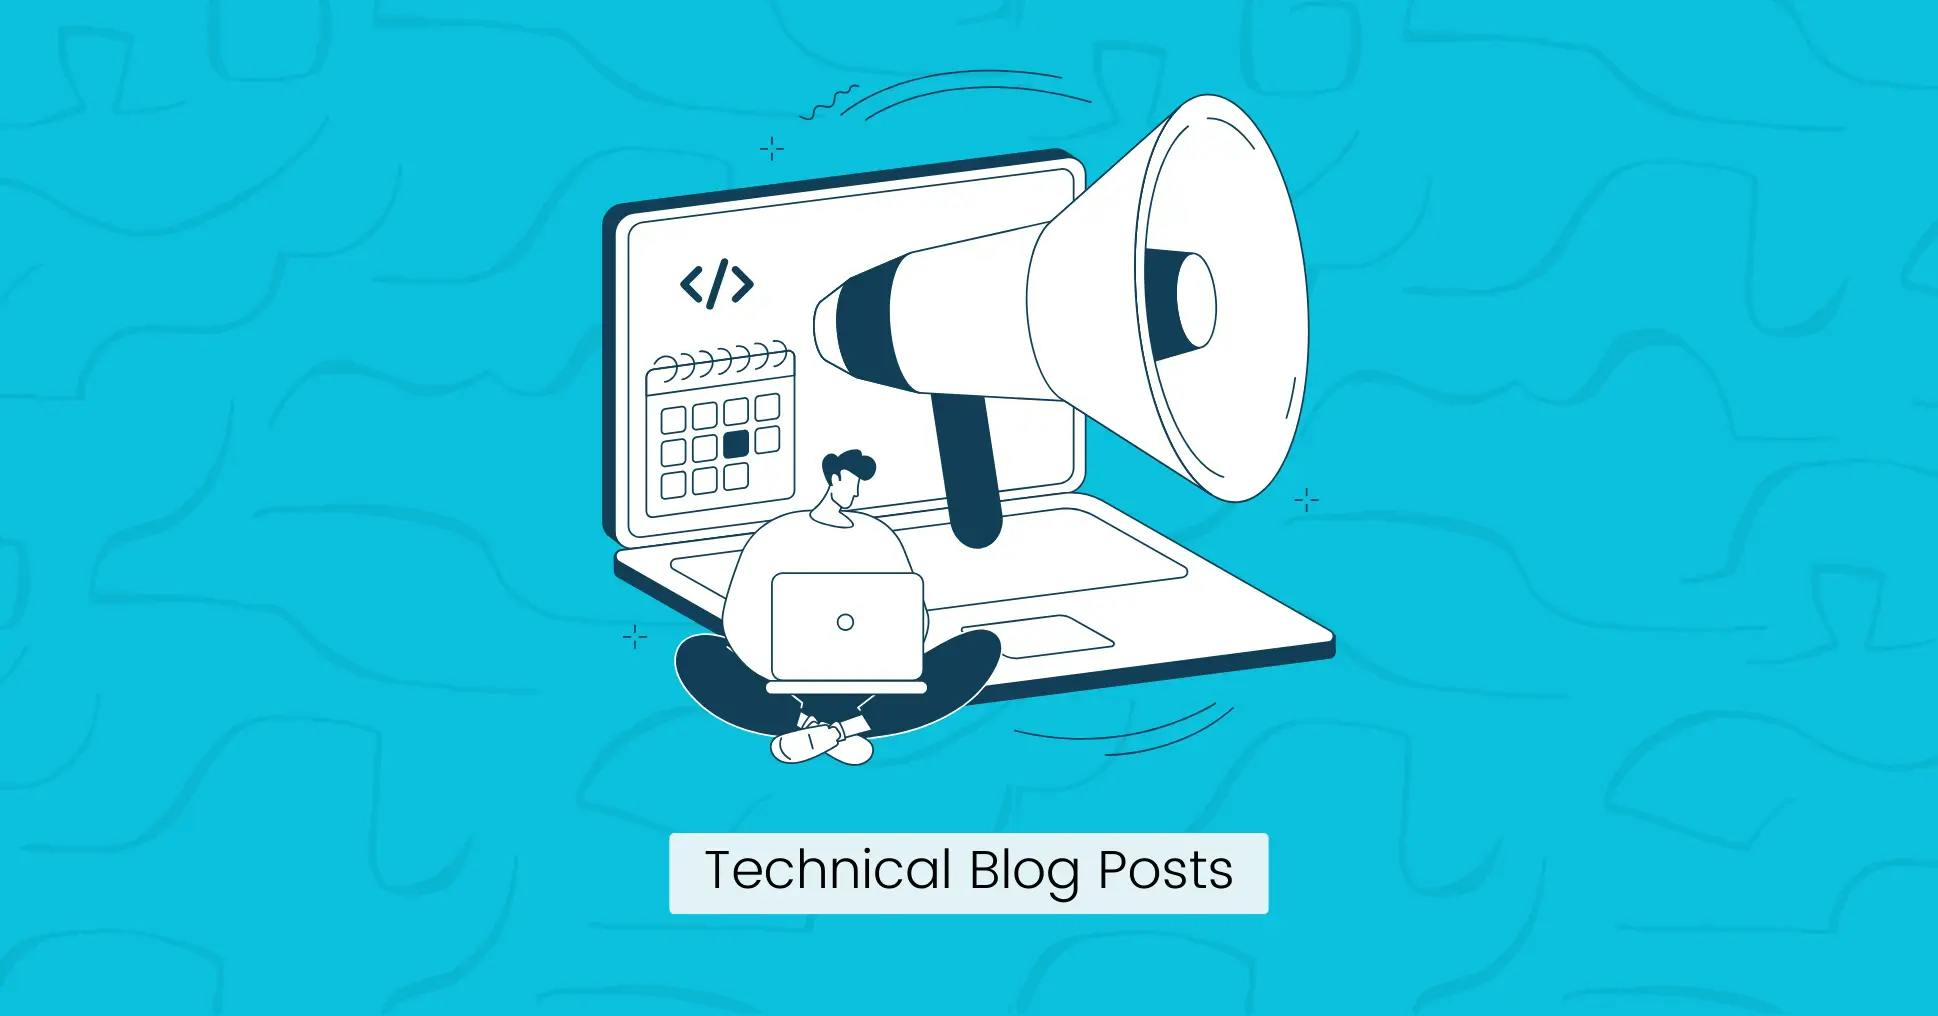 Technical Blog Posts